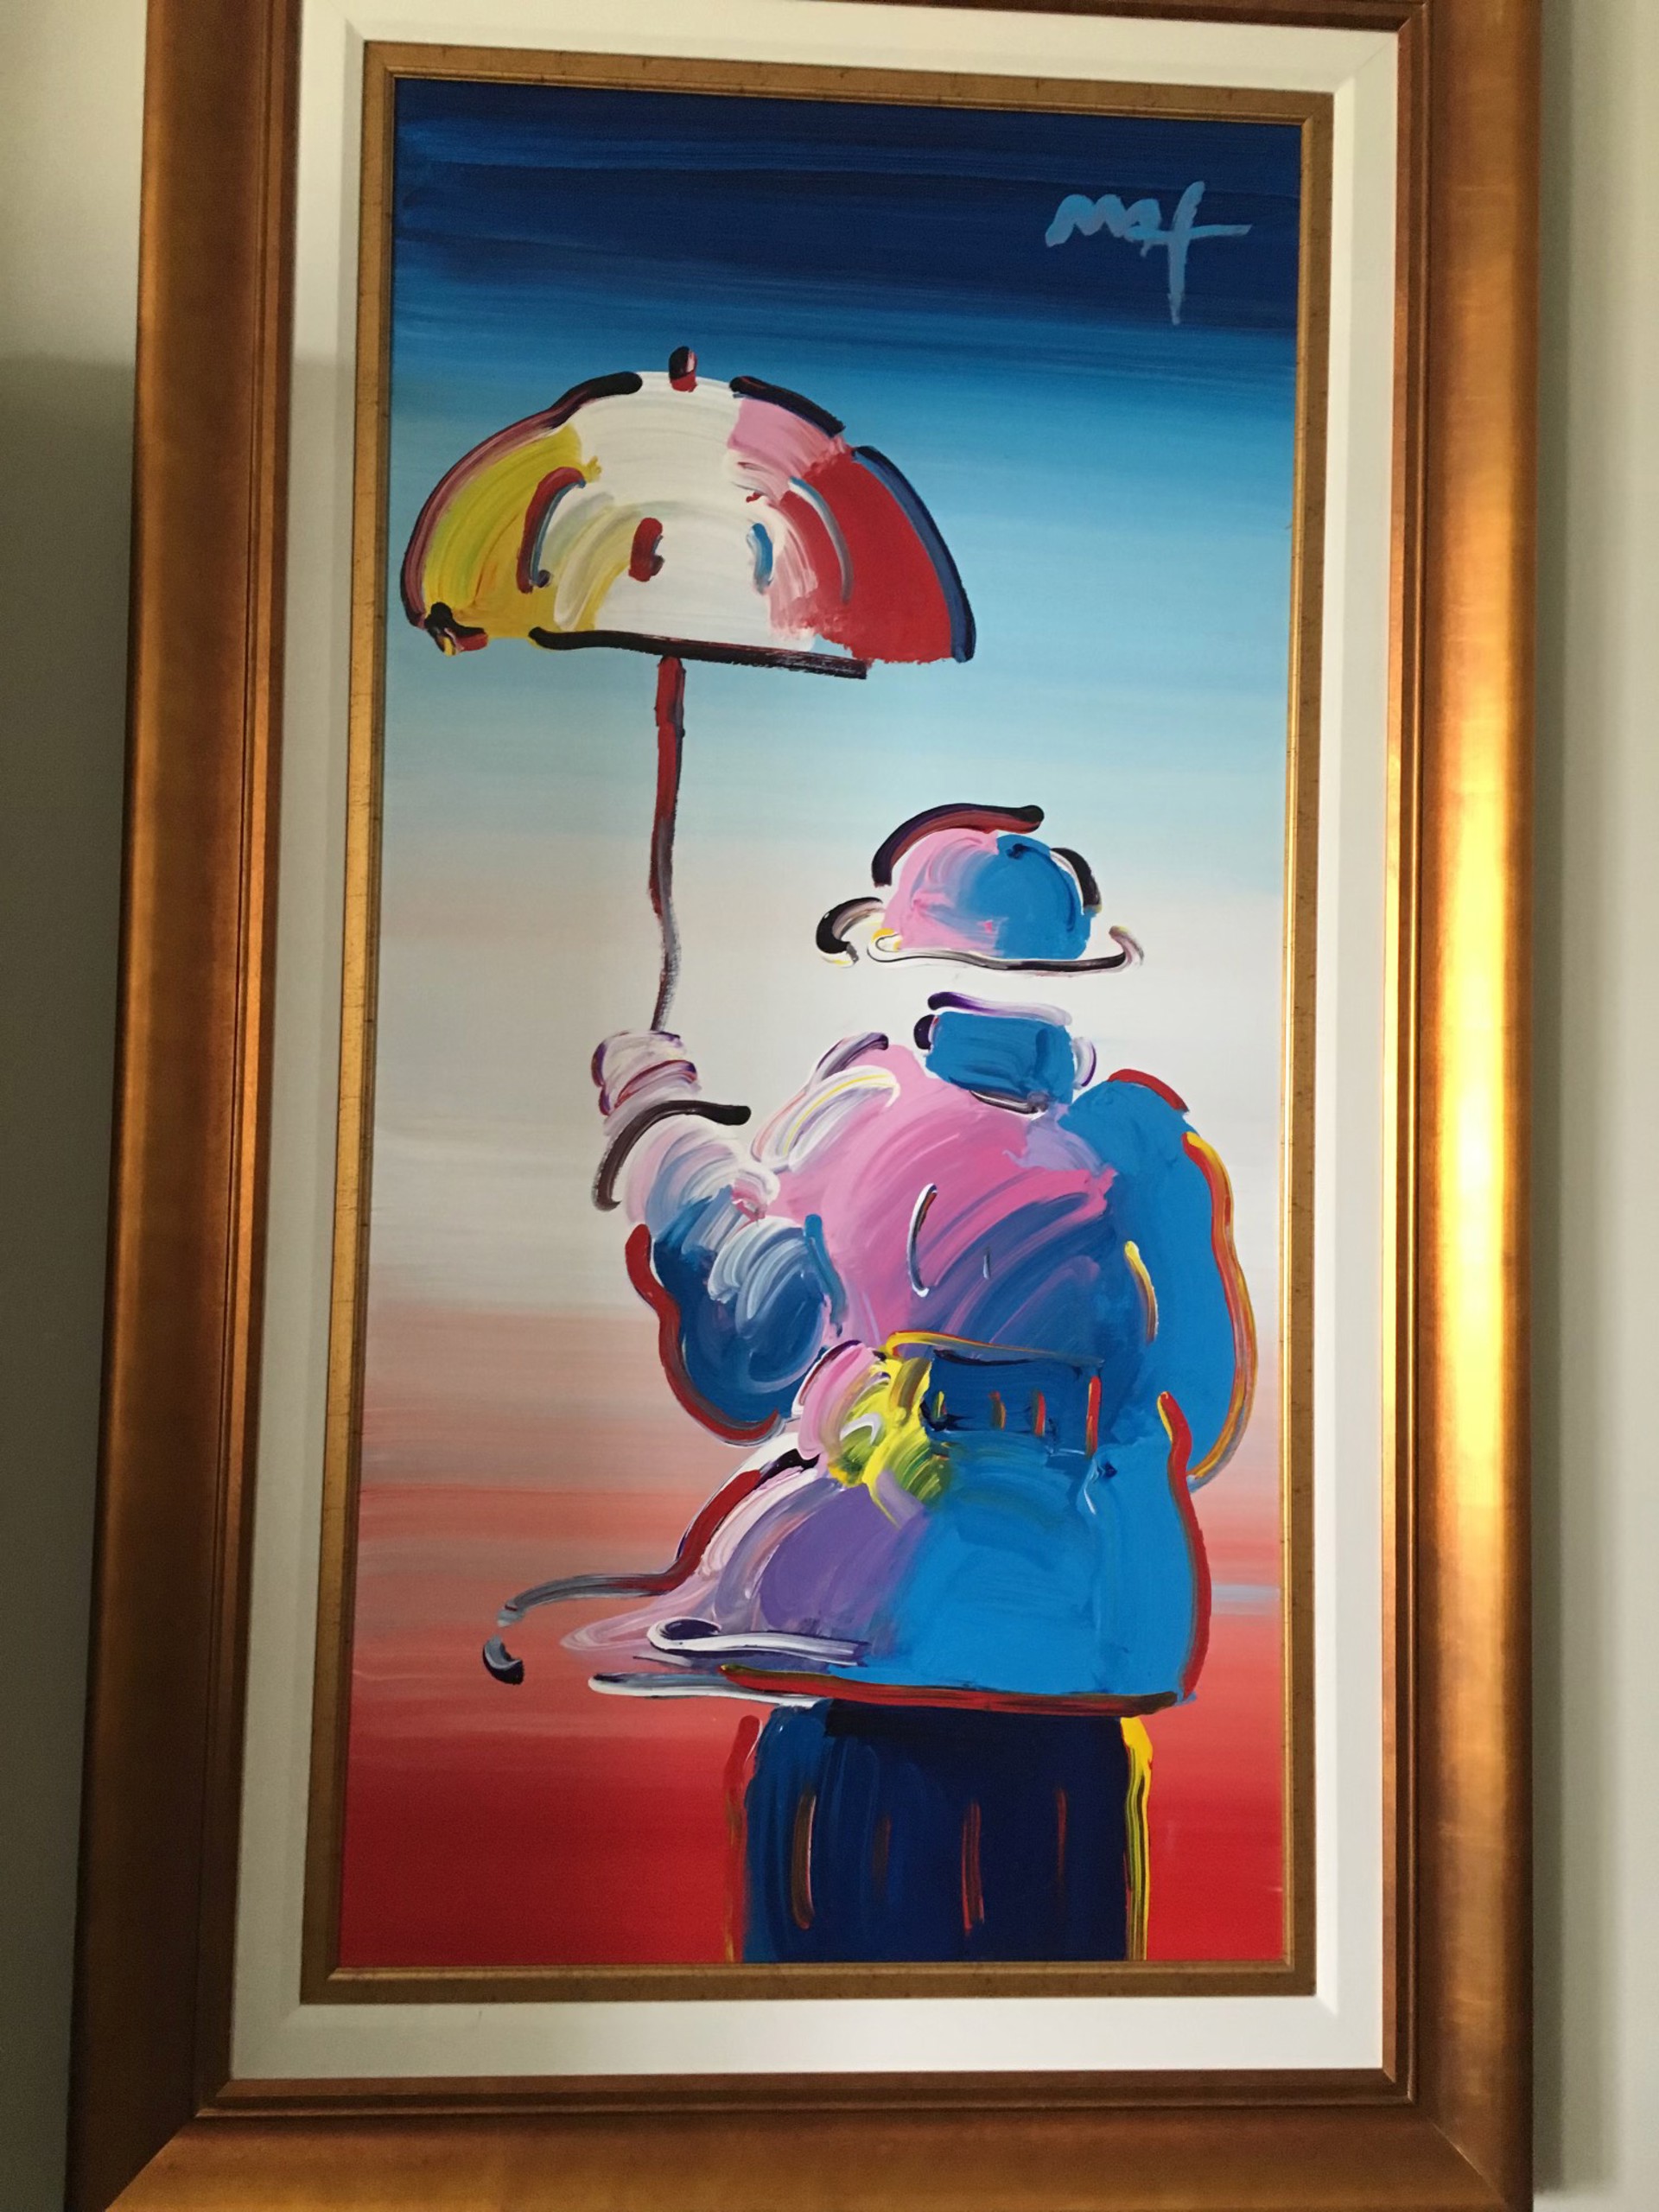 Umbrella Man on Blend Detail Ver. VI #10 by Peter Max